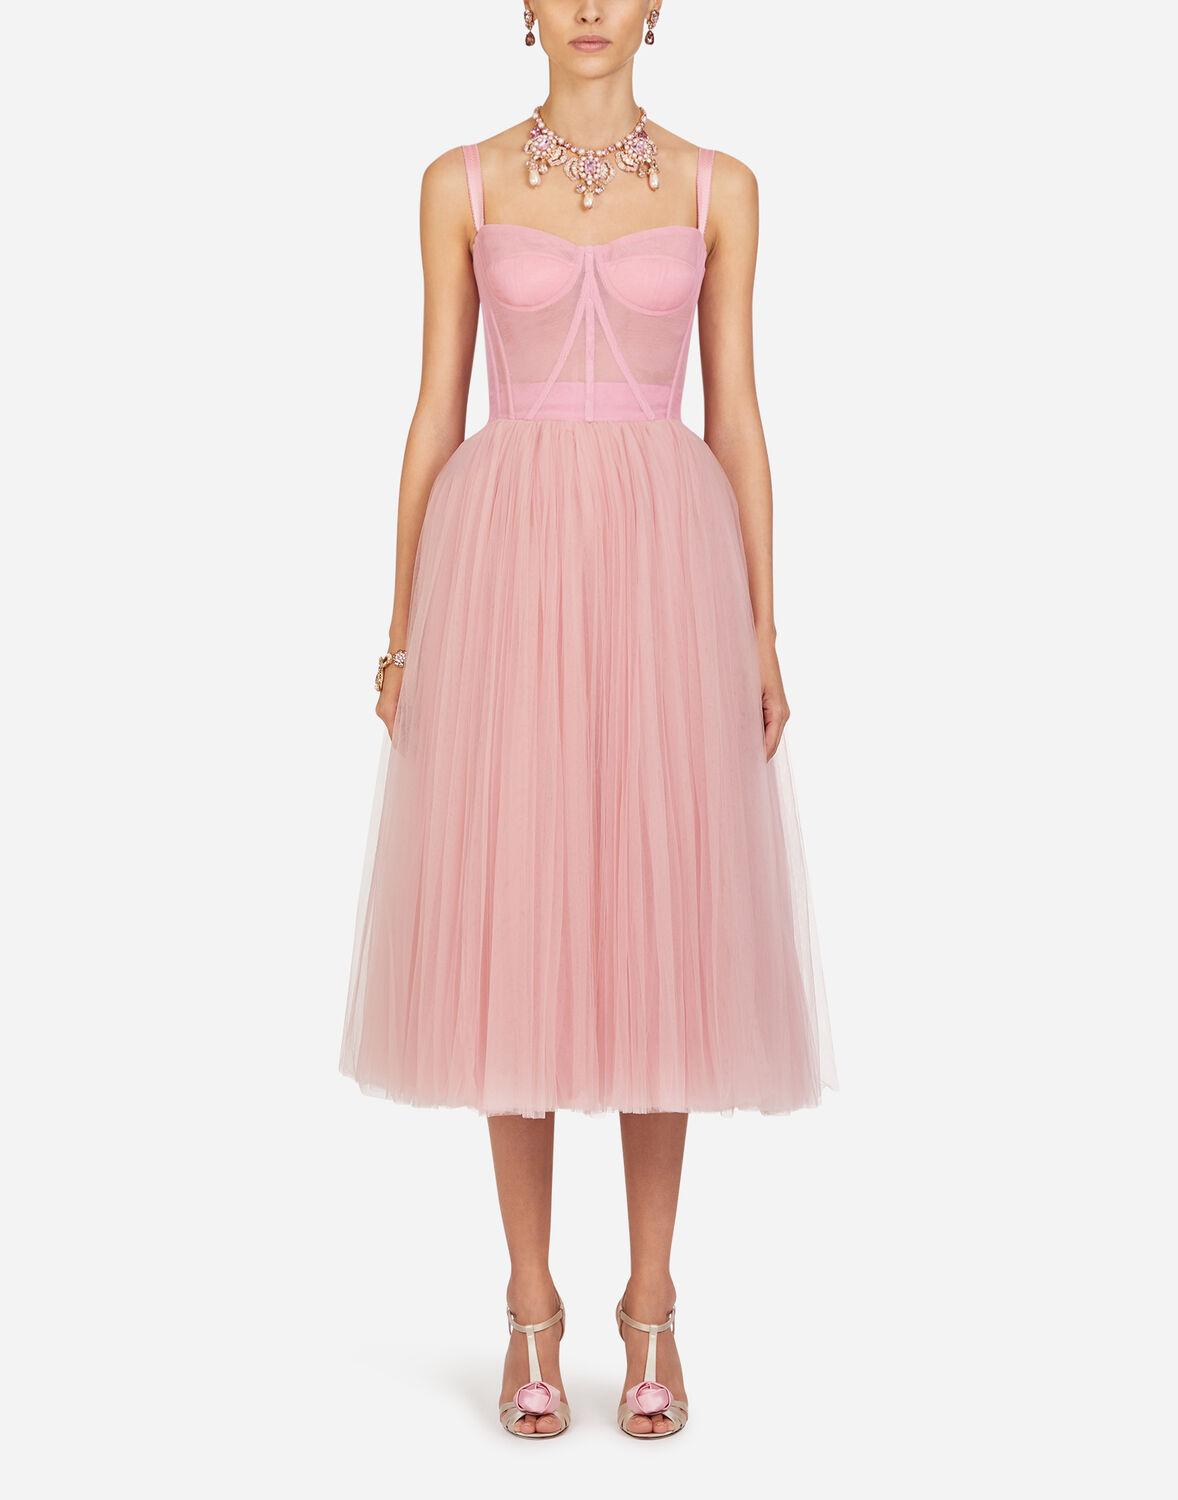 dolce and gabbana pink dress